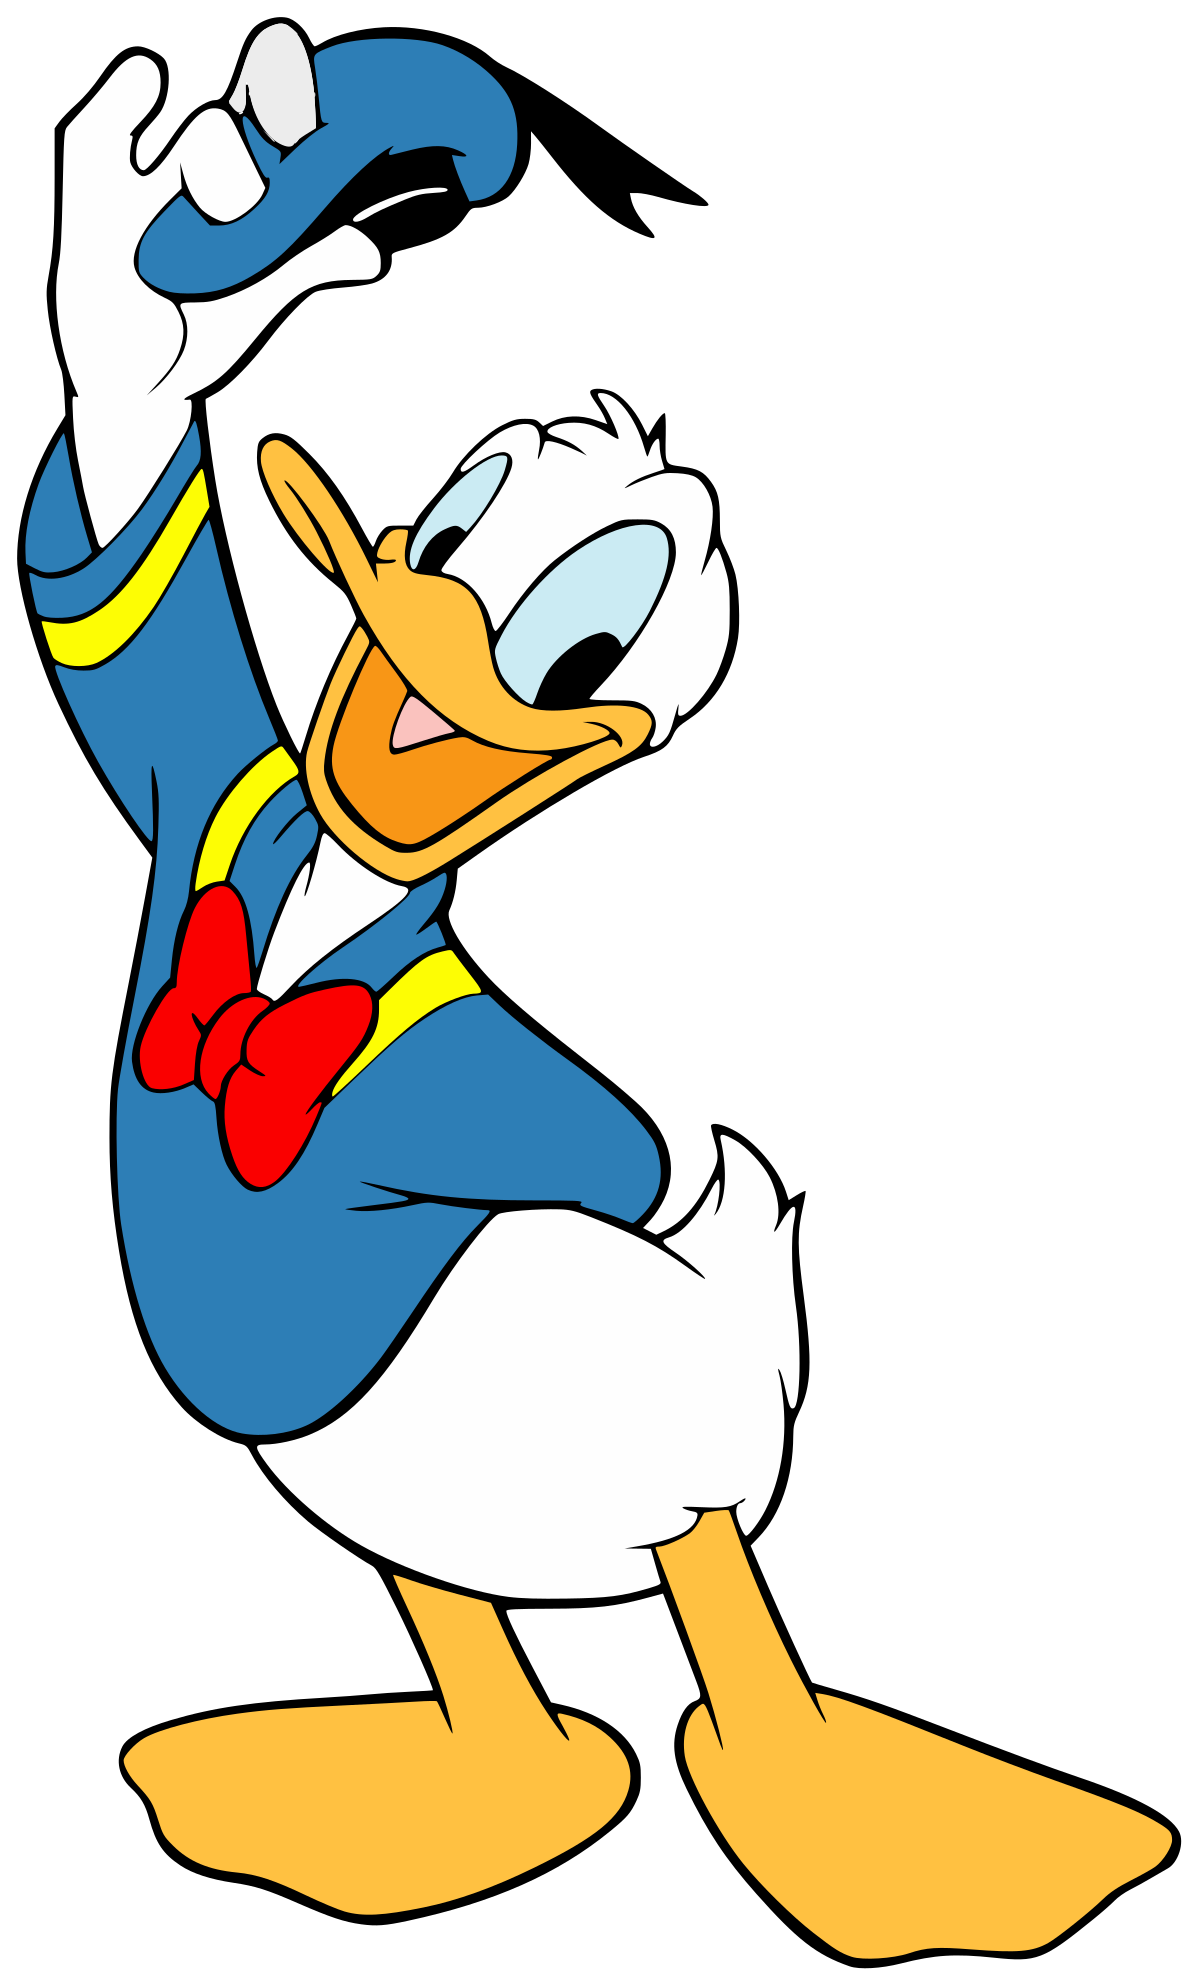 Donald Duck | Fictional Characters Wiki | Fandom